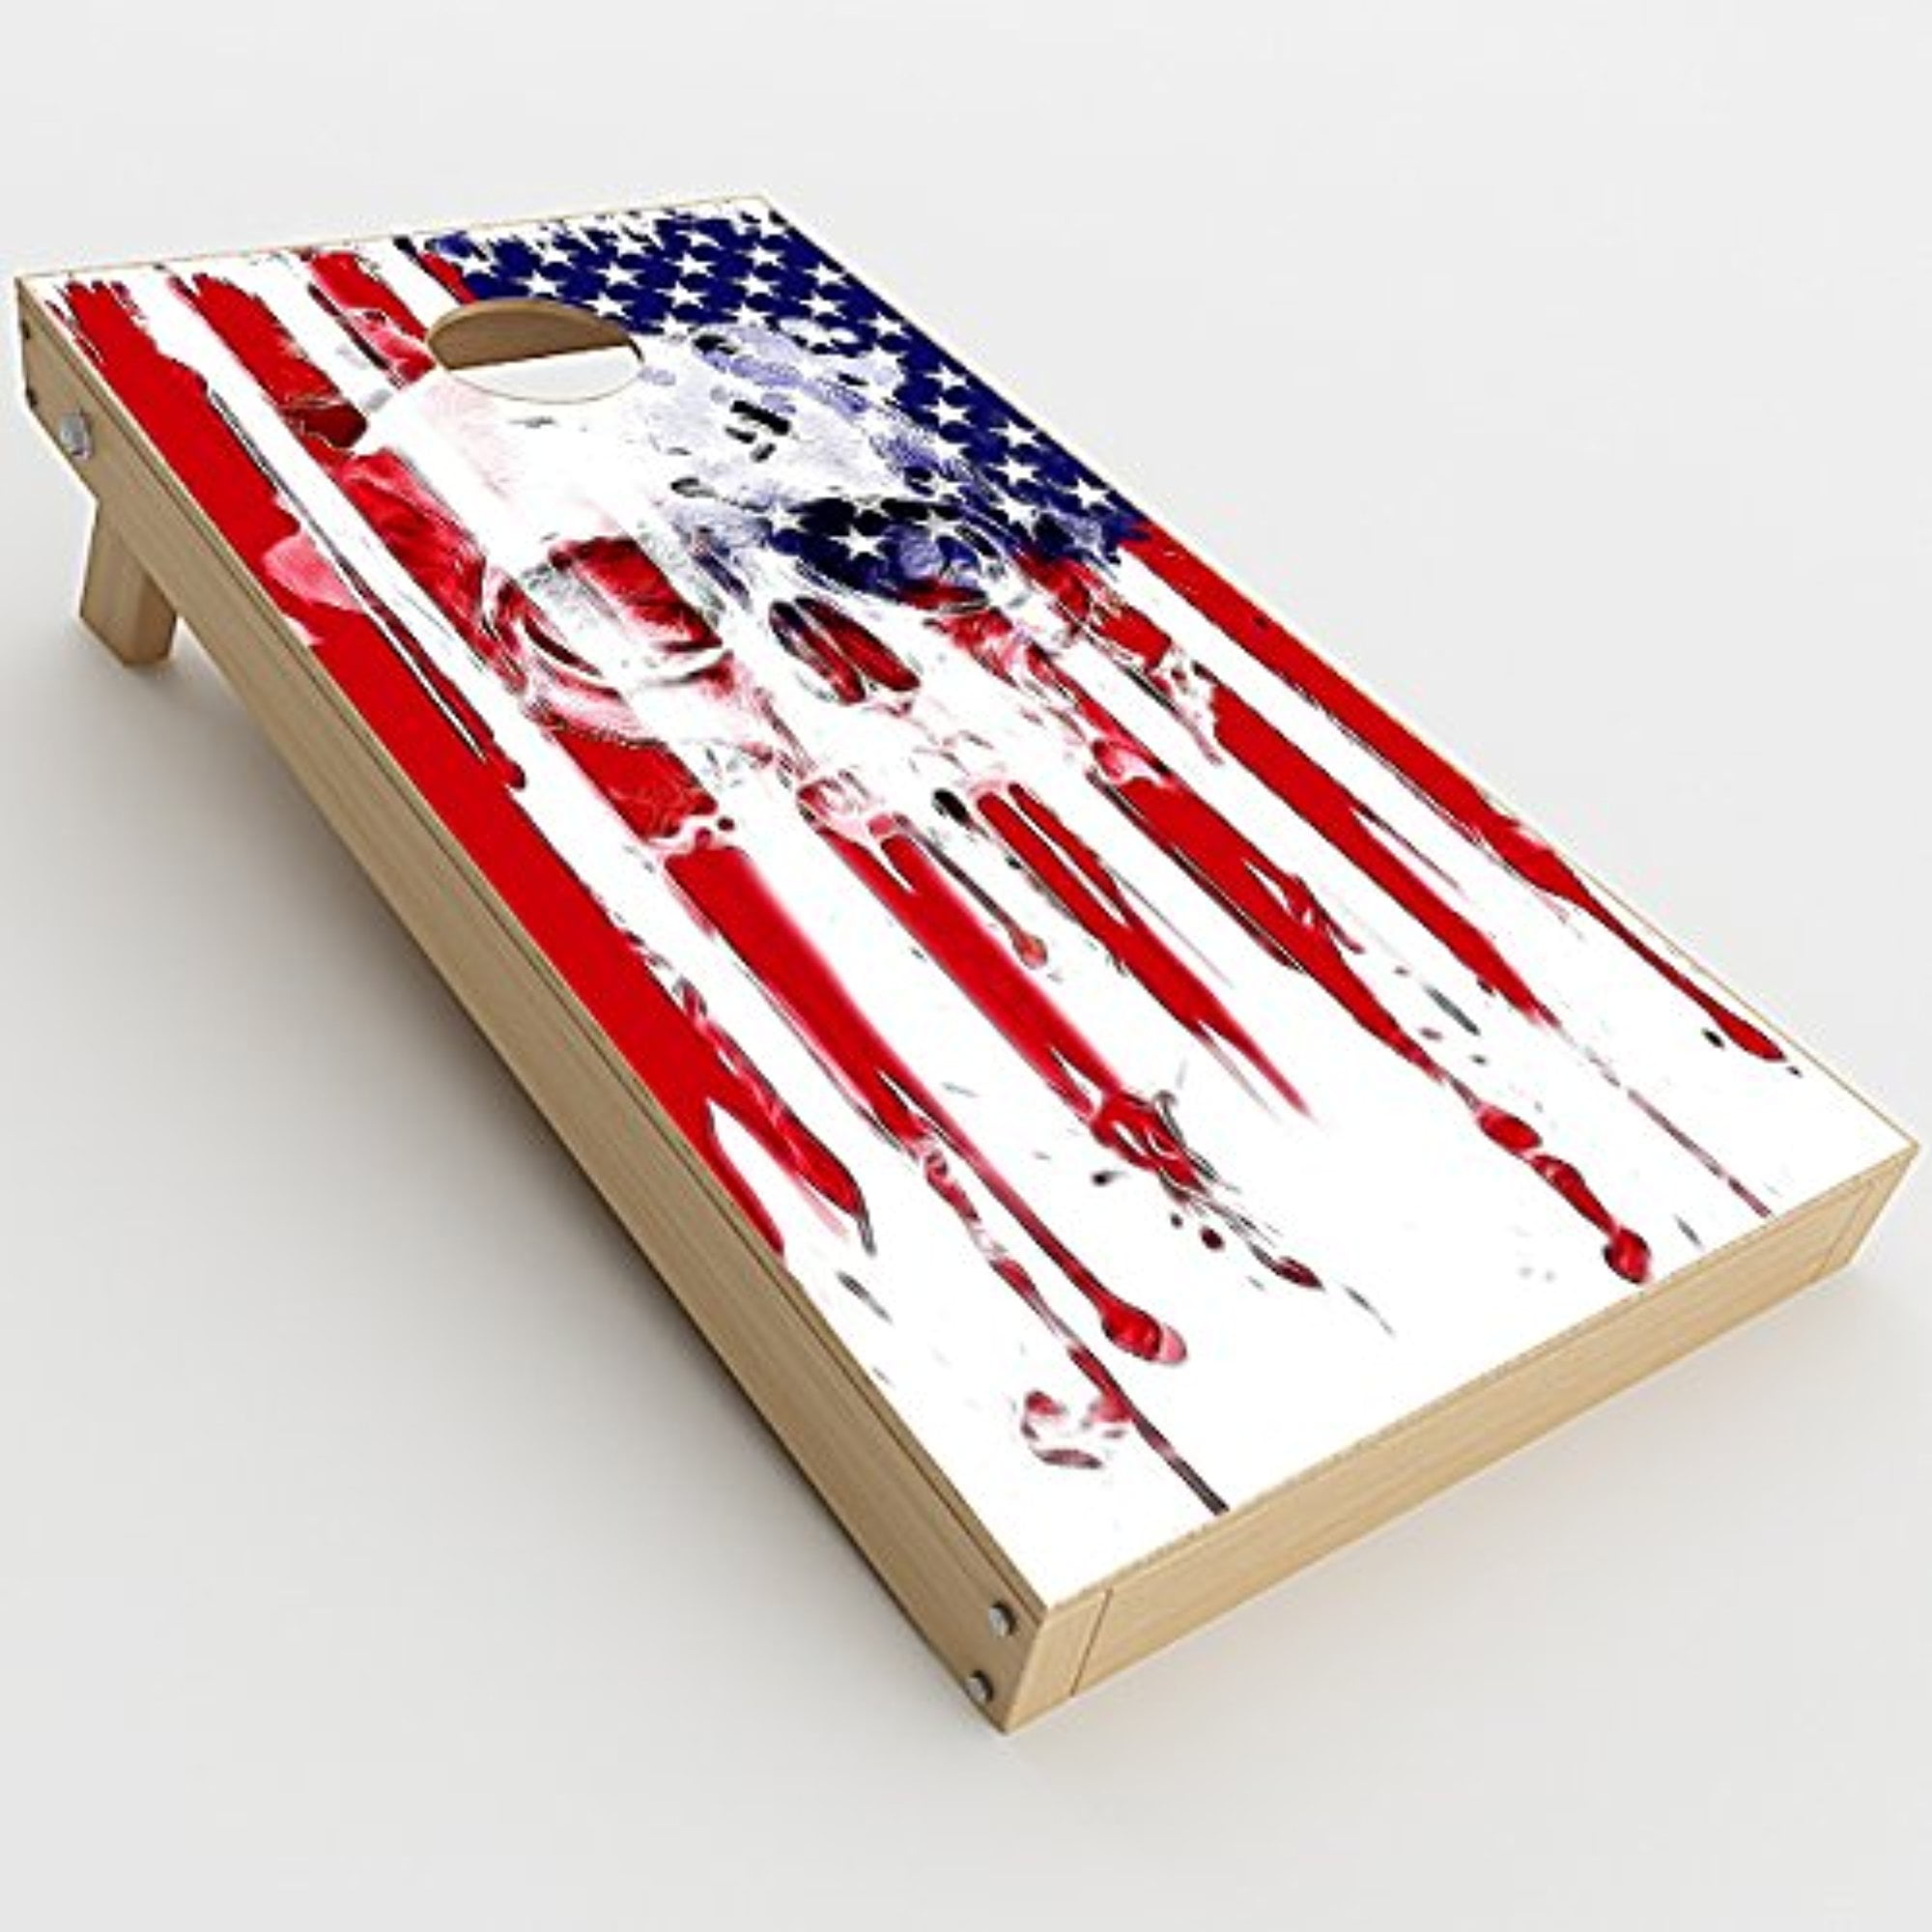 2xpcs. / Eagle America Flag Inde Skin Decal  for Cornhole Game Board Bag Toss 